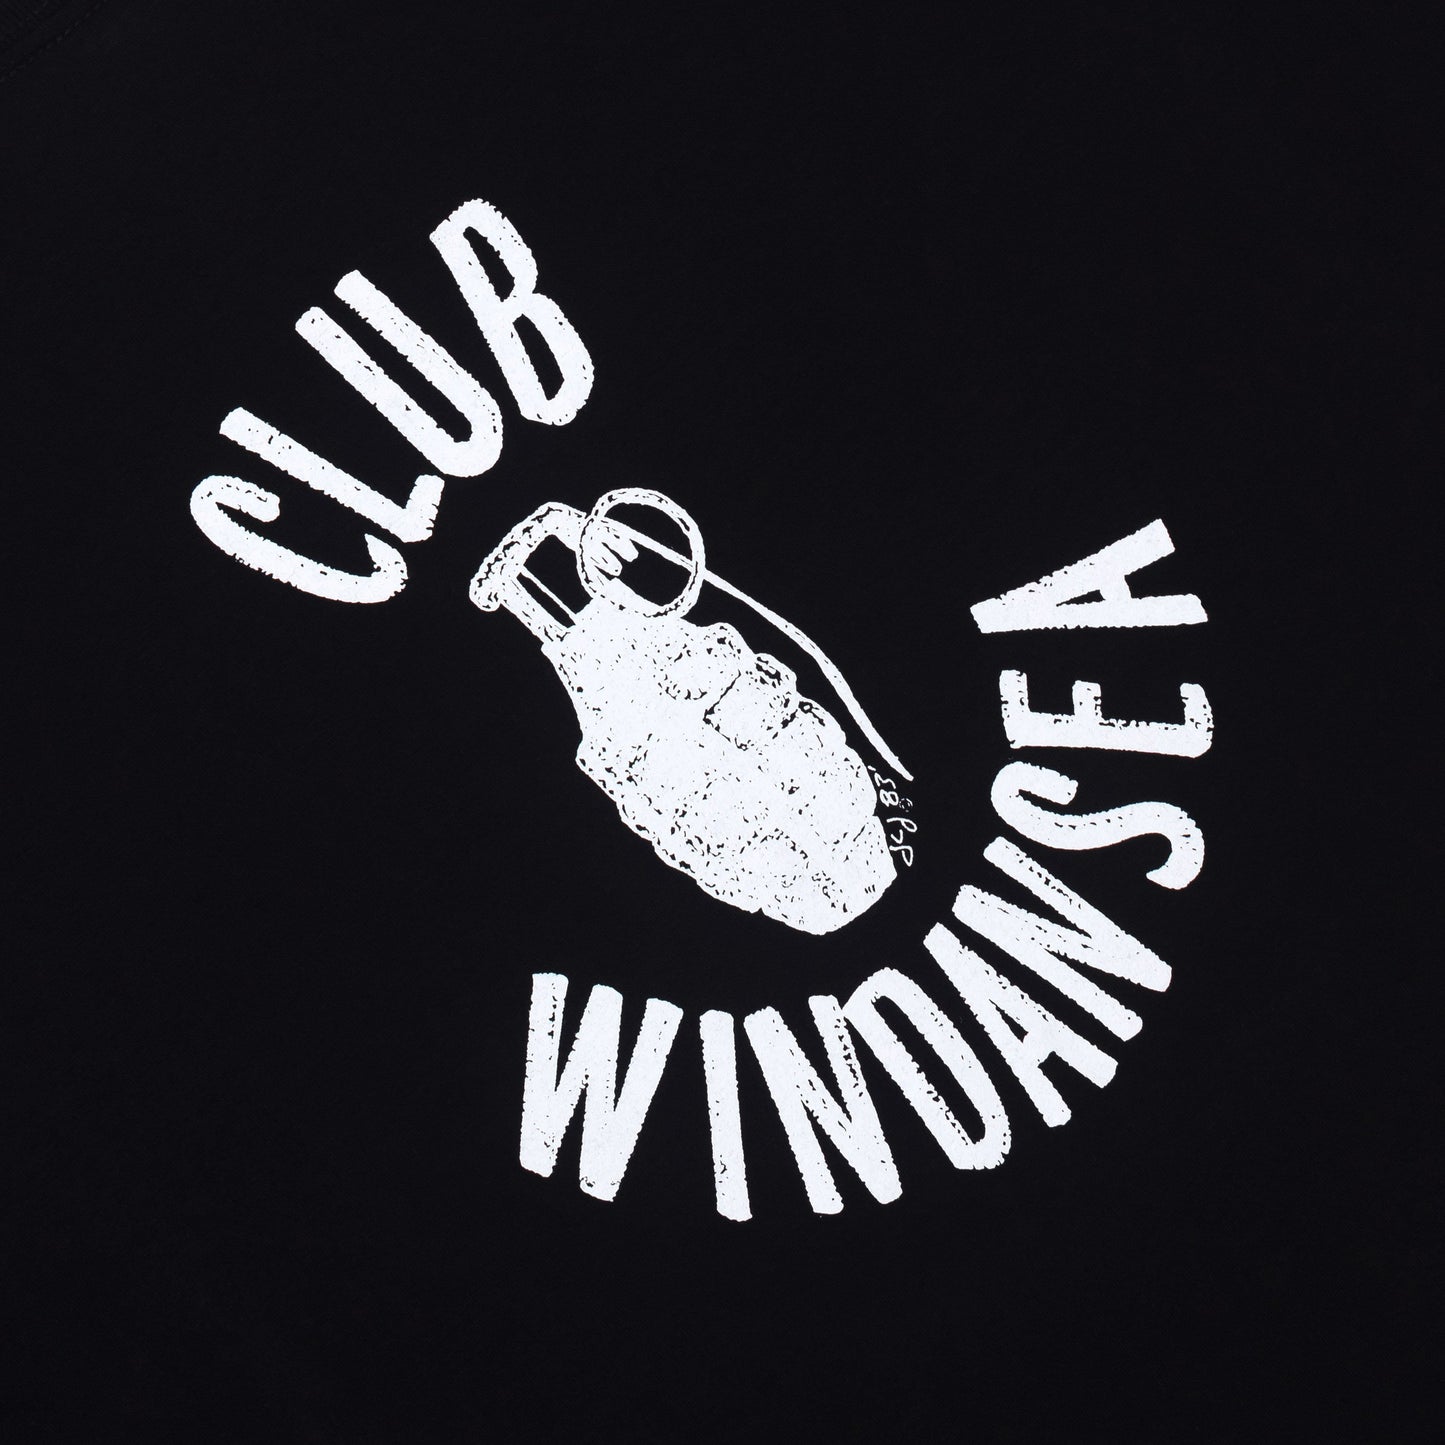 100% Cotton T-shirt (Mac Meda Club Windansea Tee - Black)